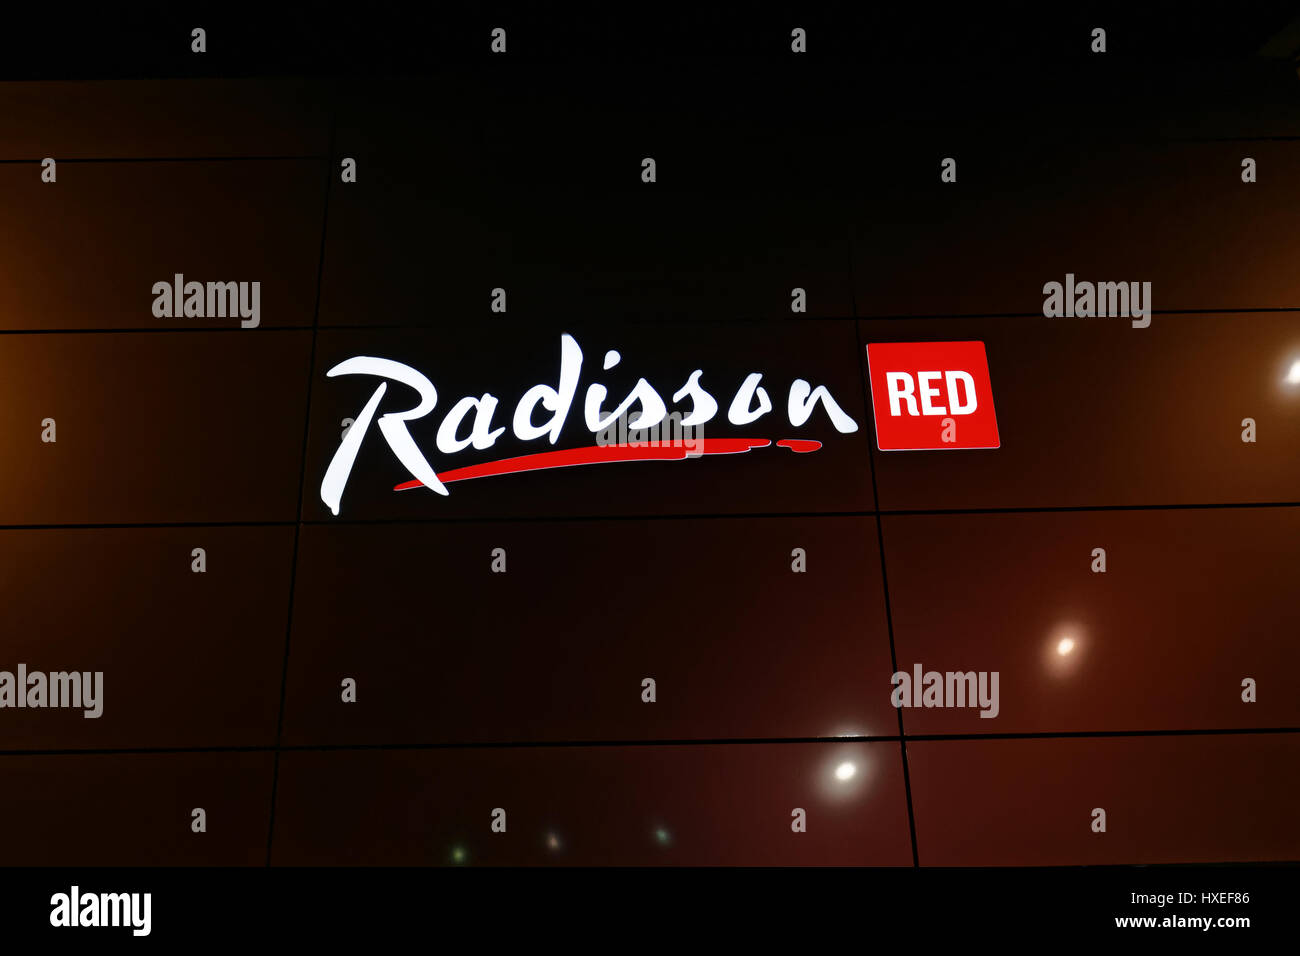 Radisson Red sign Stock Photo